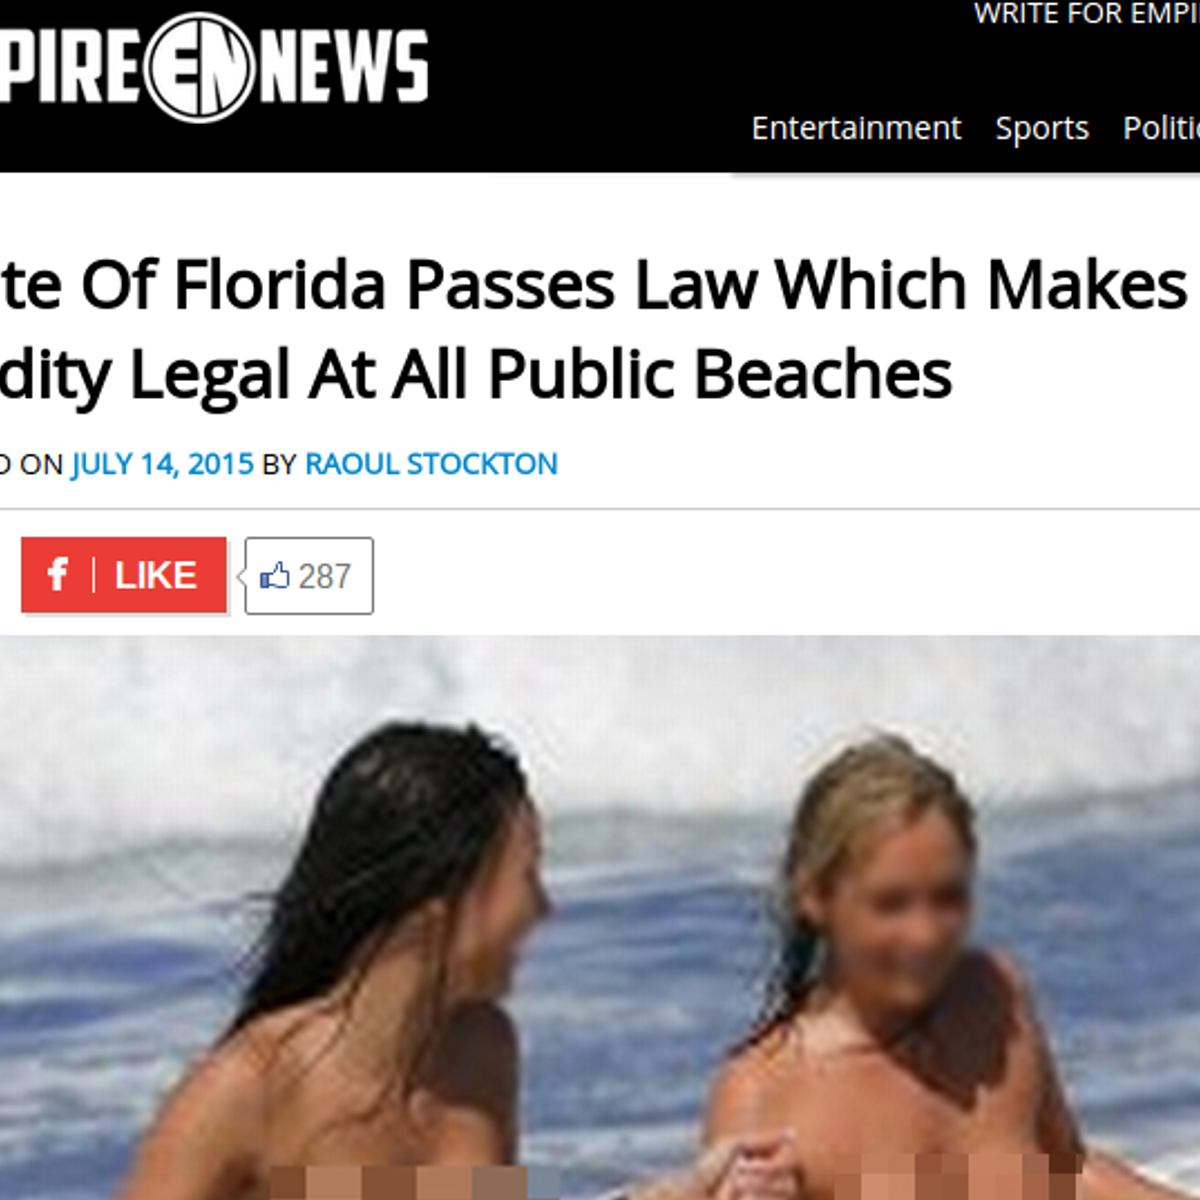 Accidental beach nudity